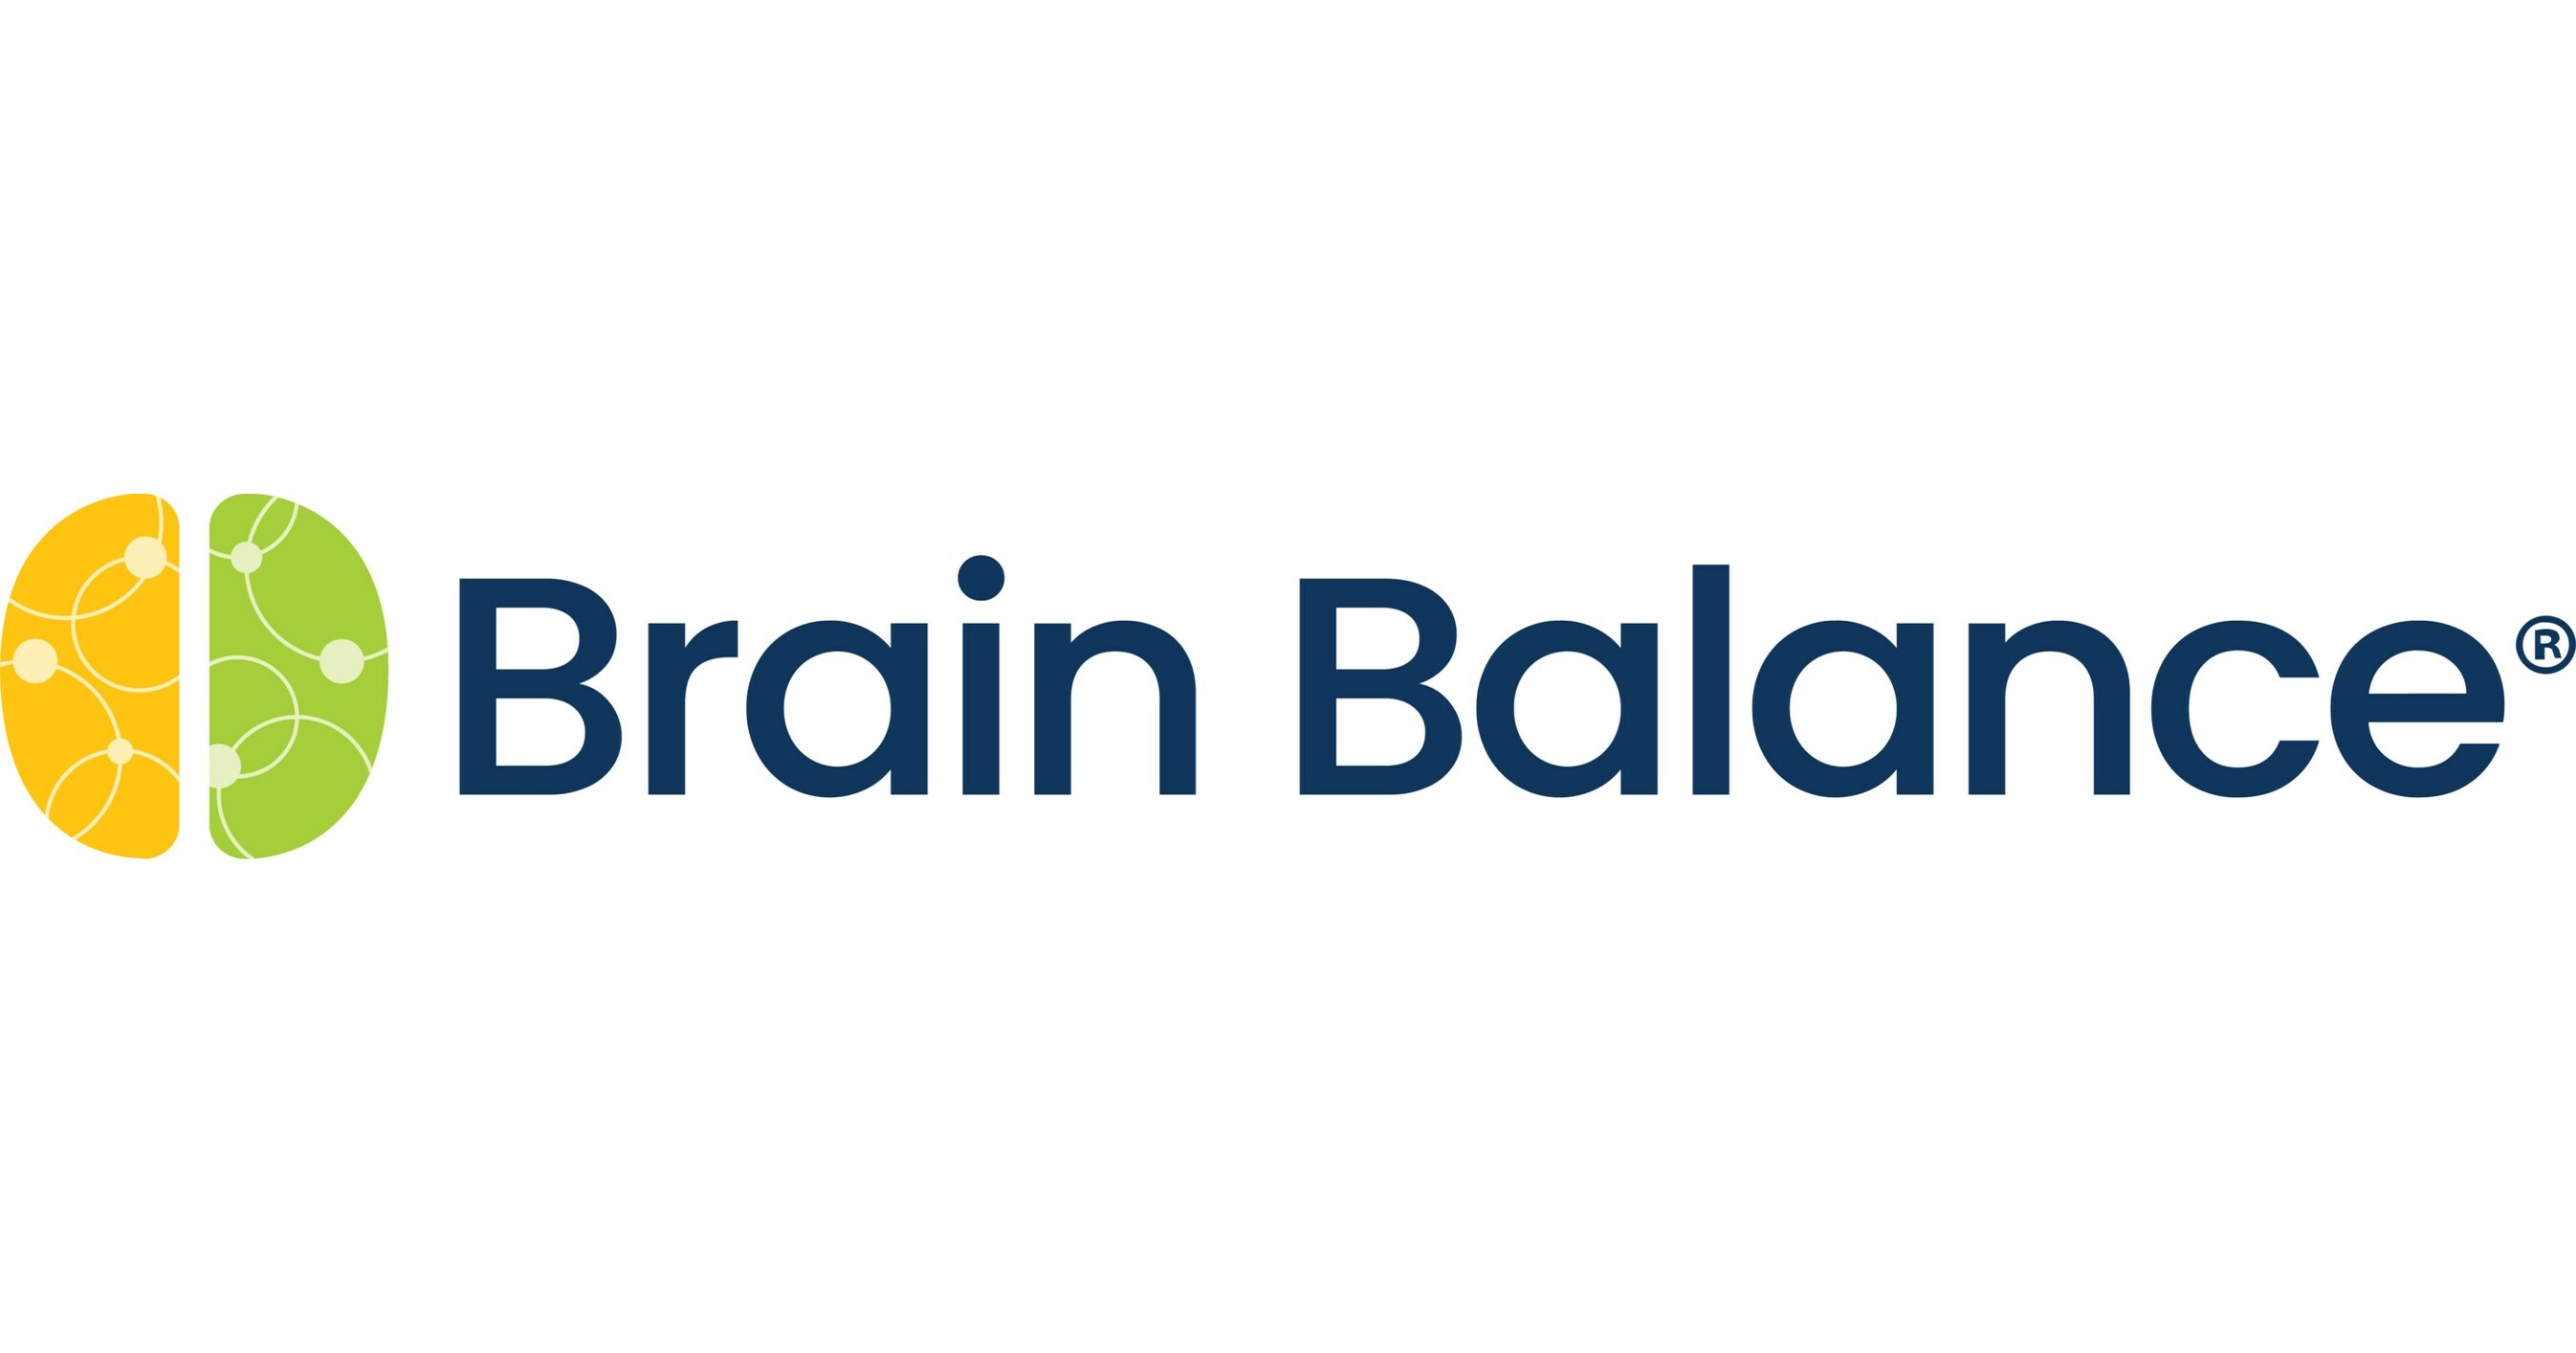 BRAIN BALANCE APPOINTS VERONICA CARDINALE ELLINGER AS NEW CEO